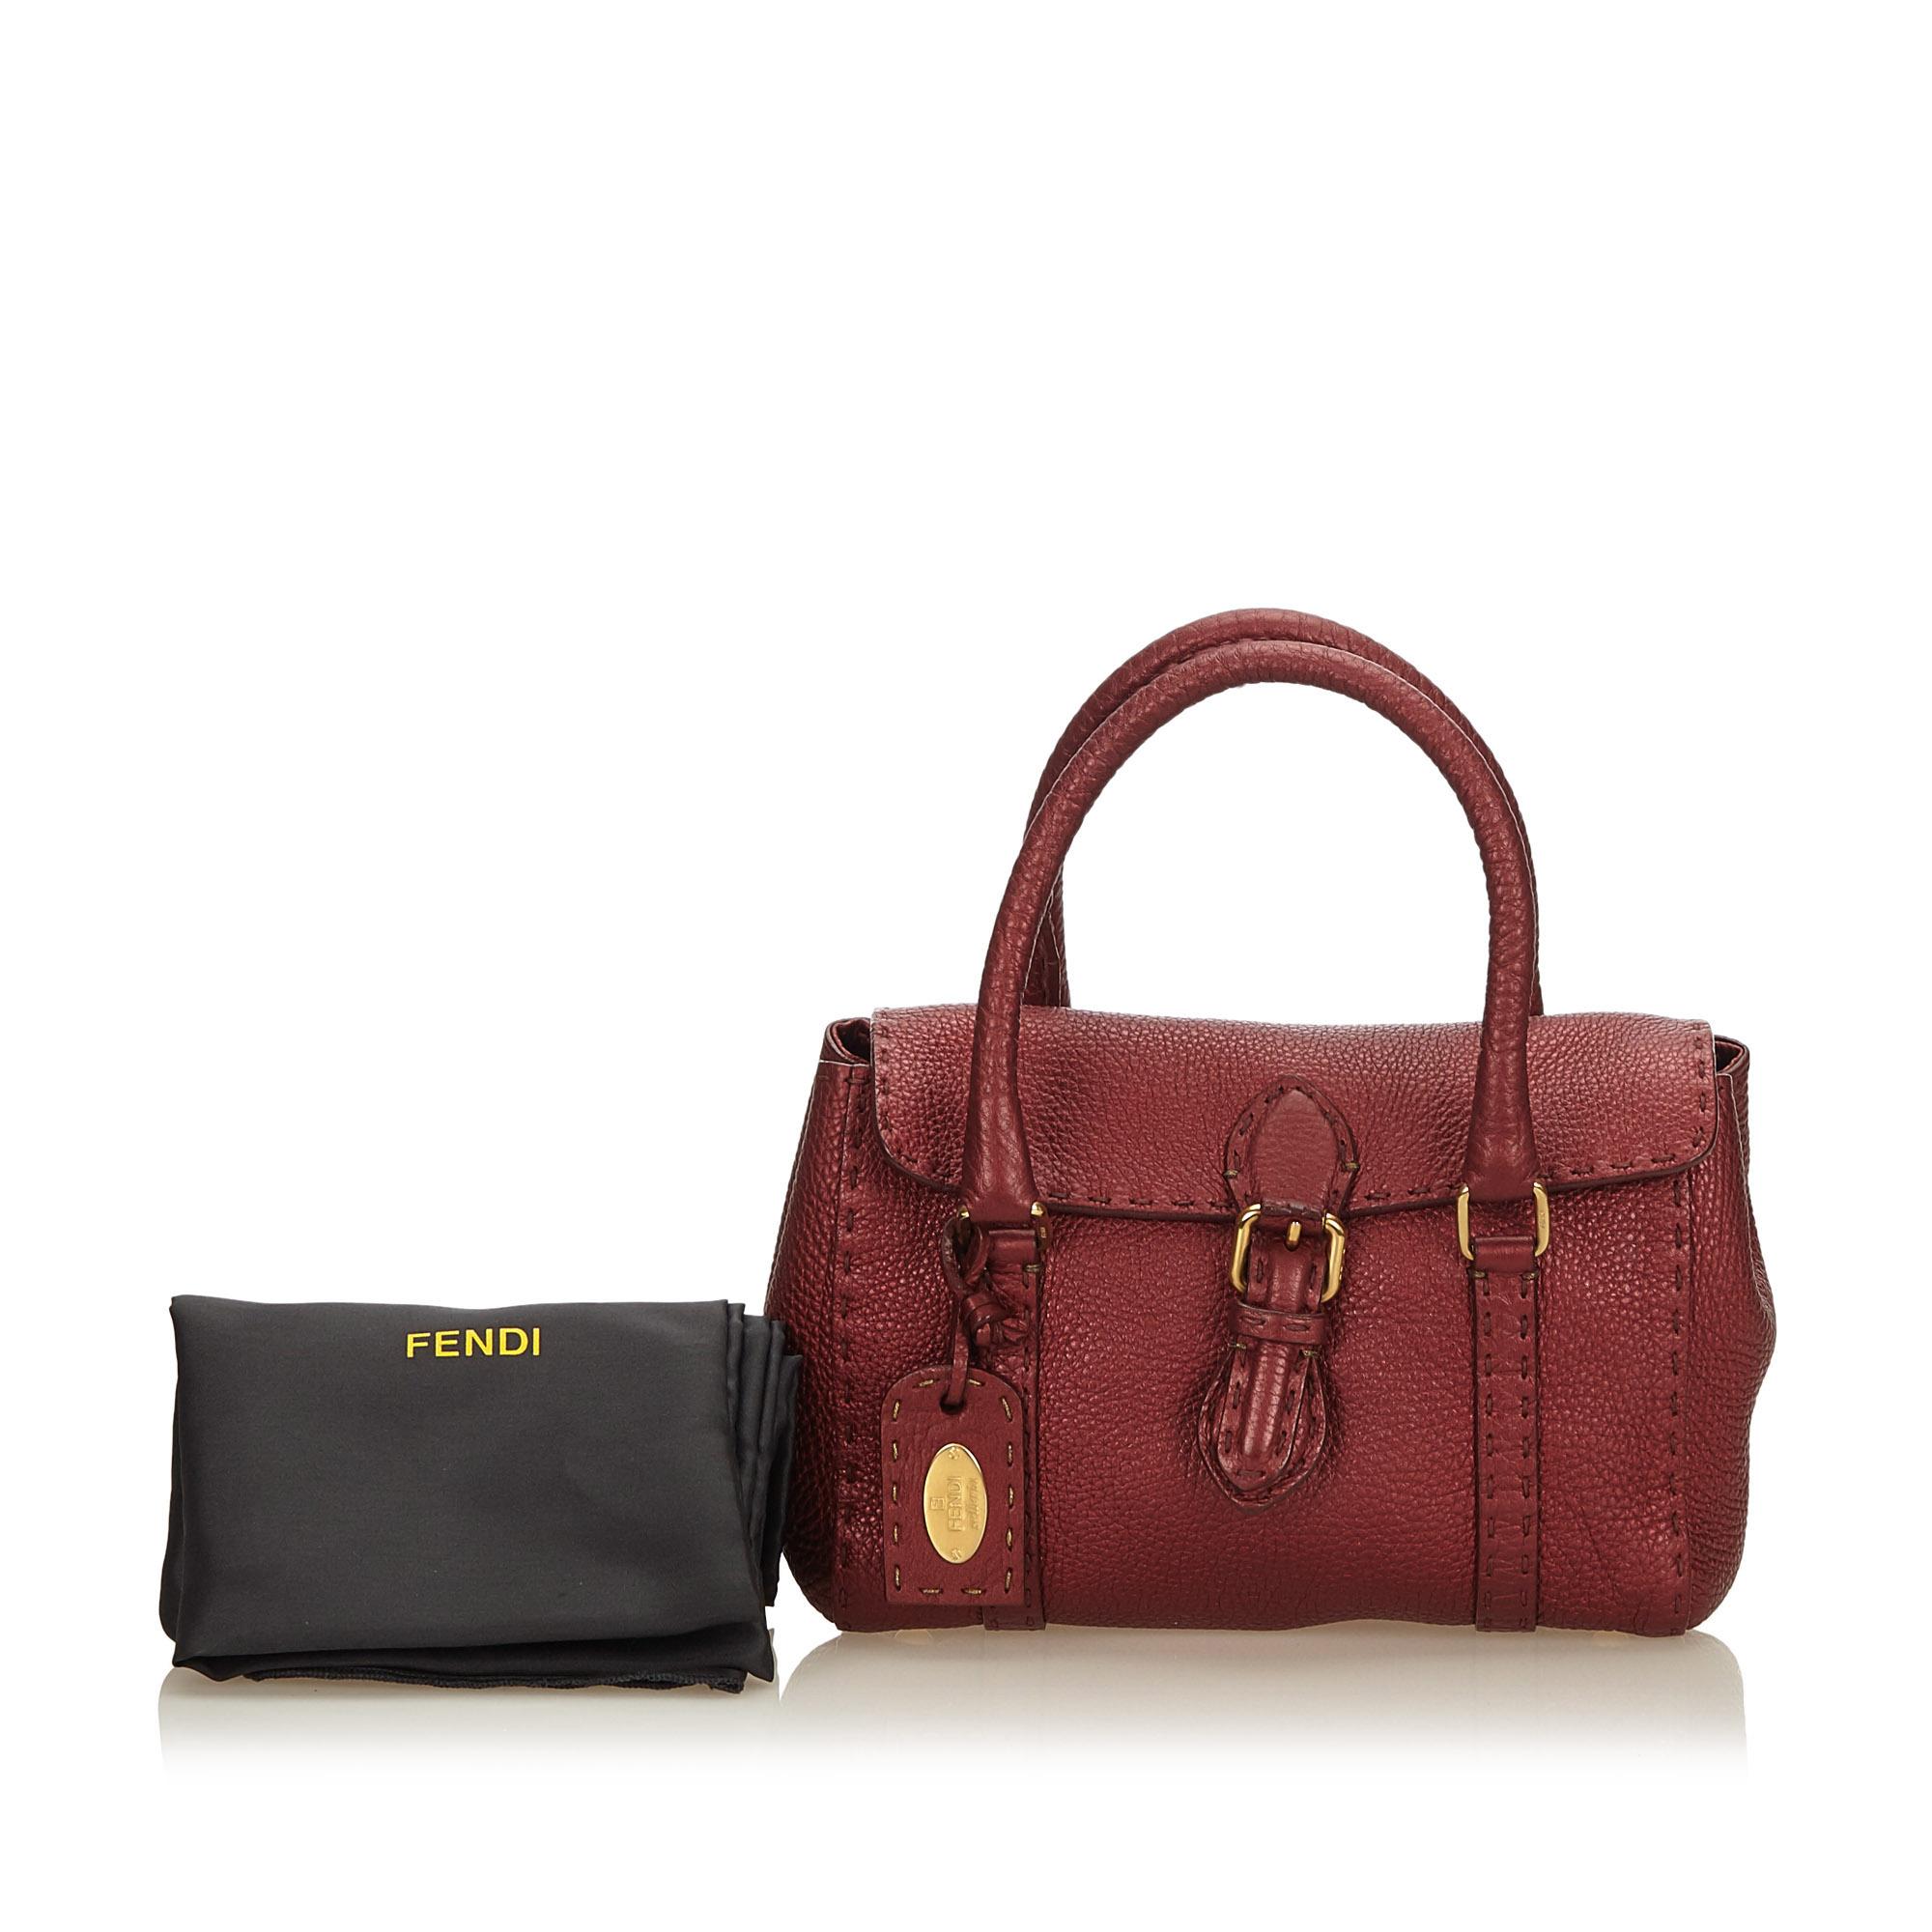 Fendi Red and Bordeau Mini Linda Handbag For Sale 6